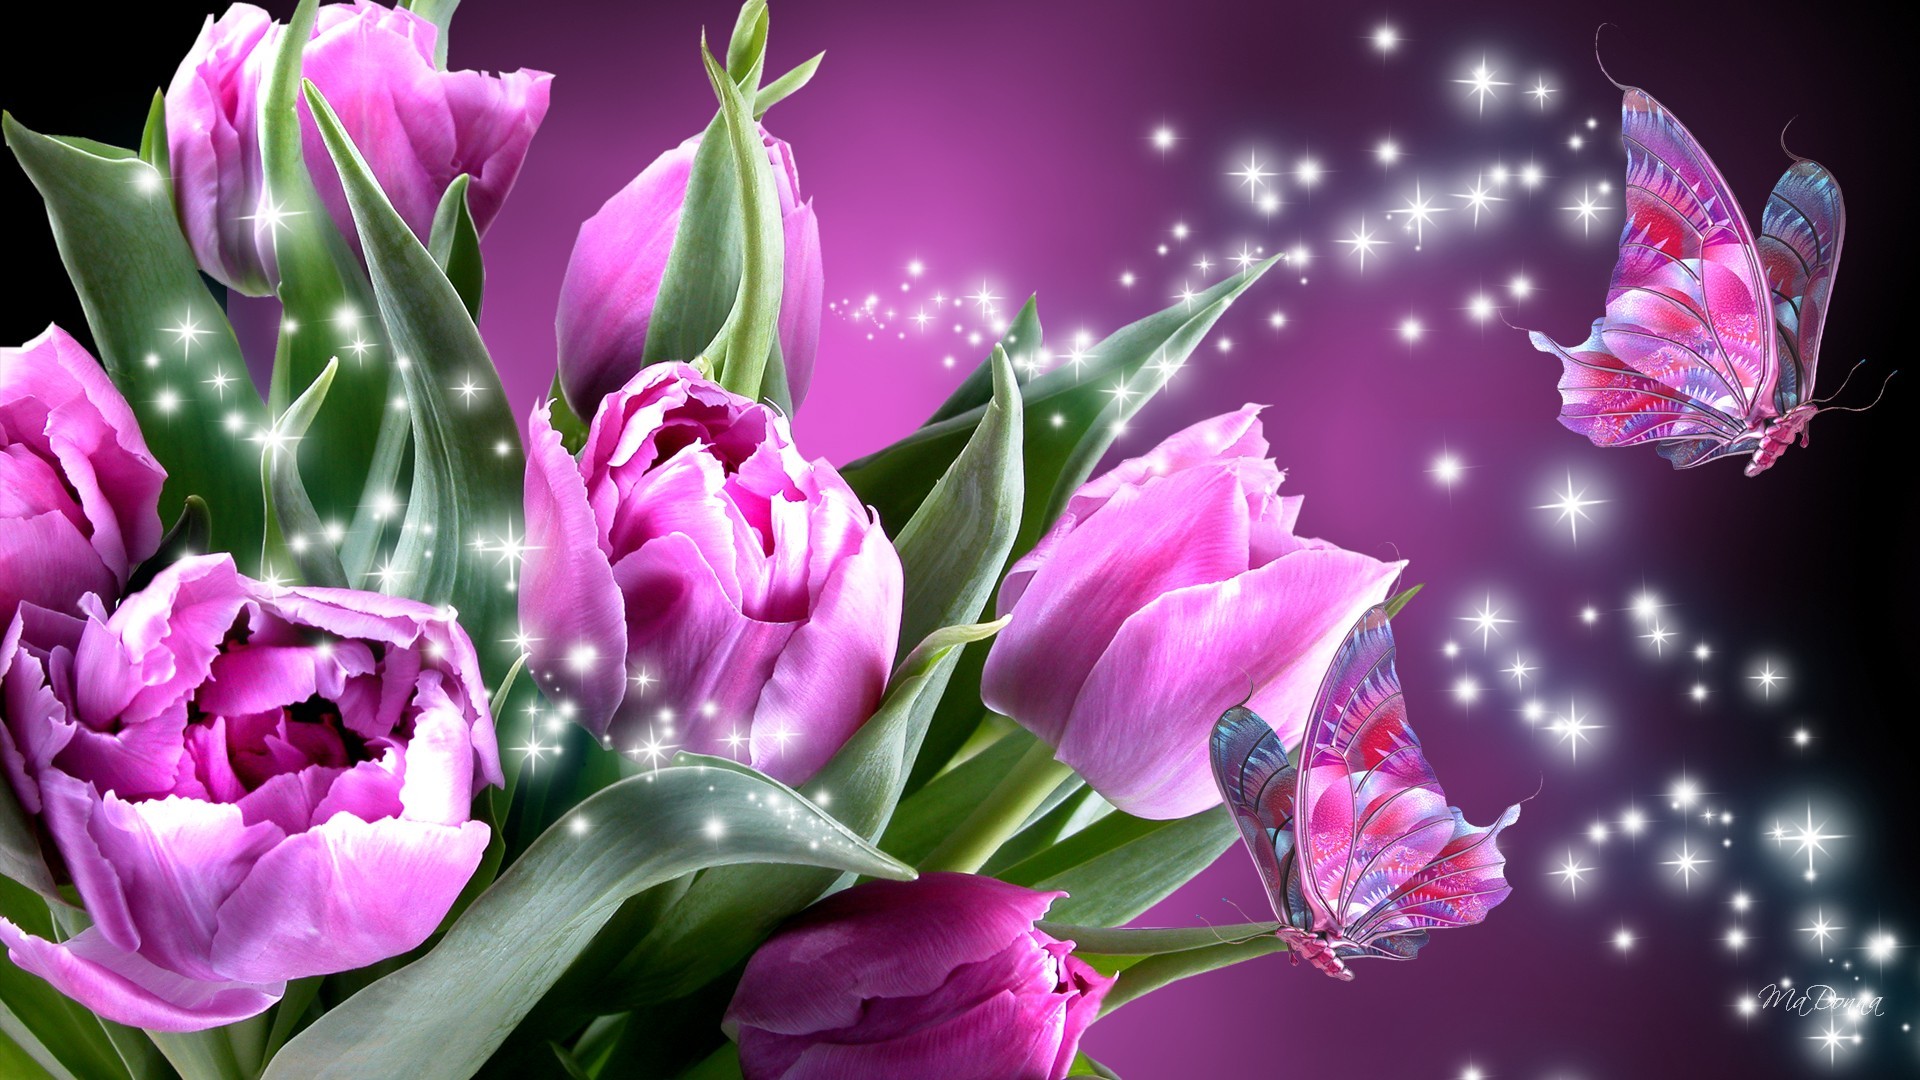 farfalla rosa live wallpaper,fiore,pianta fiorita,petalo,rosa,pianta